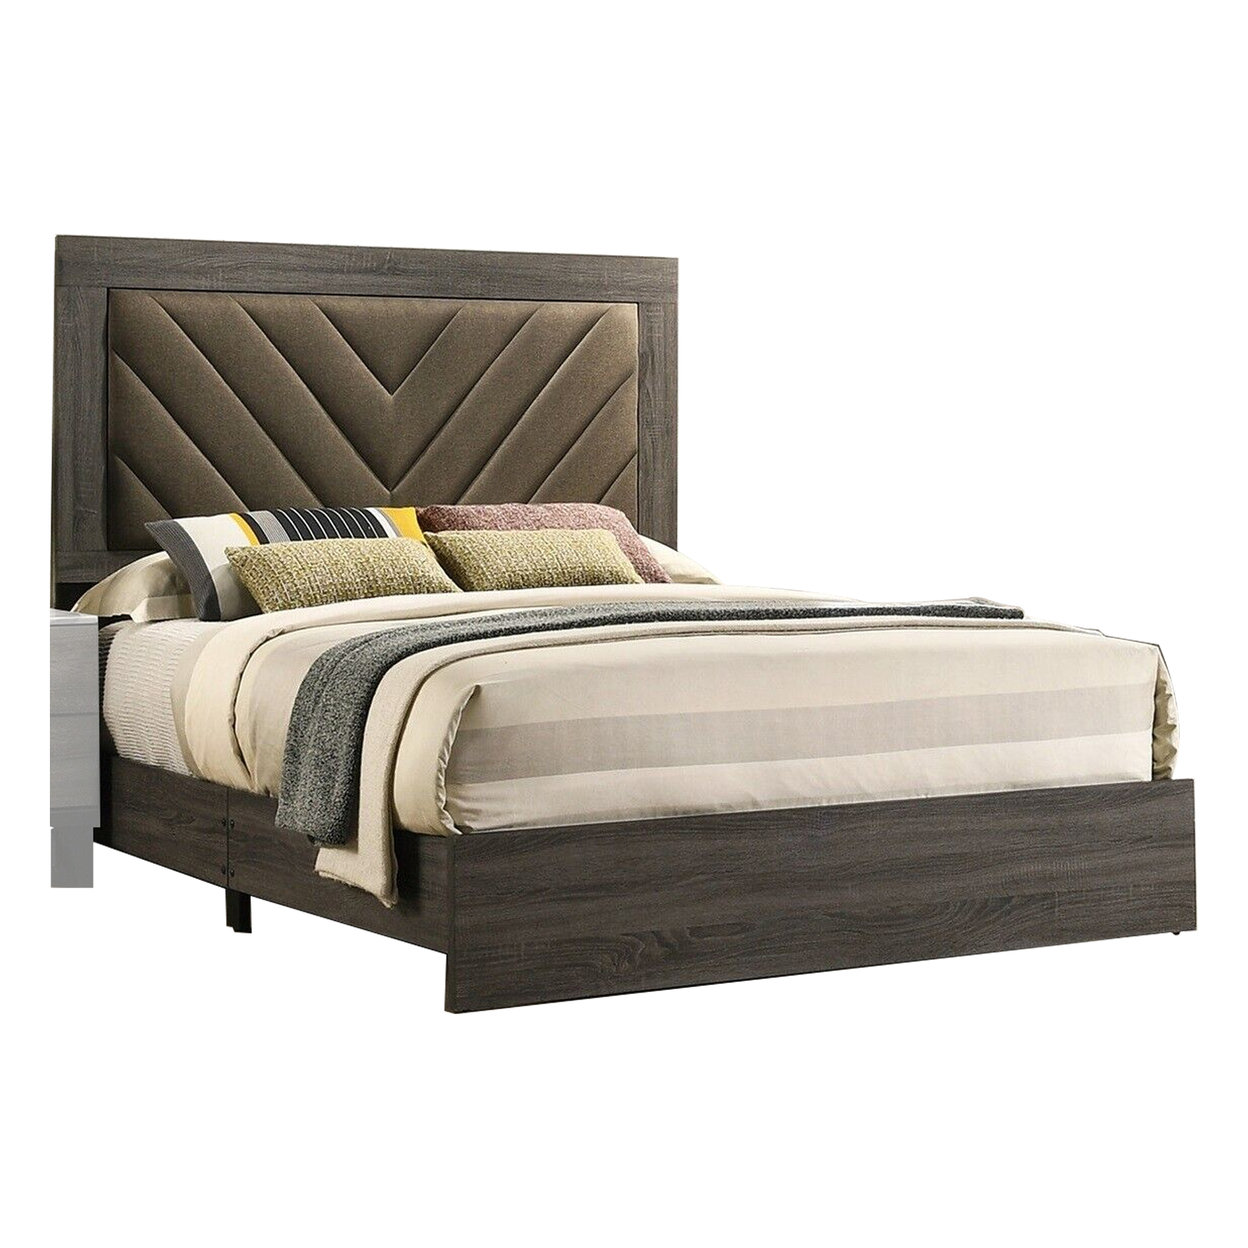 Cato Upholstered California King Bed, Tufted Brown Headboard, Dark Gray- Saltoro Sherpi